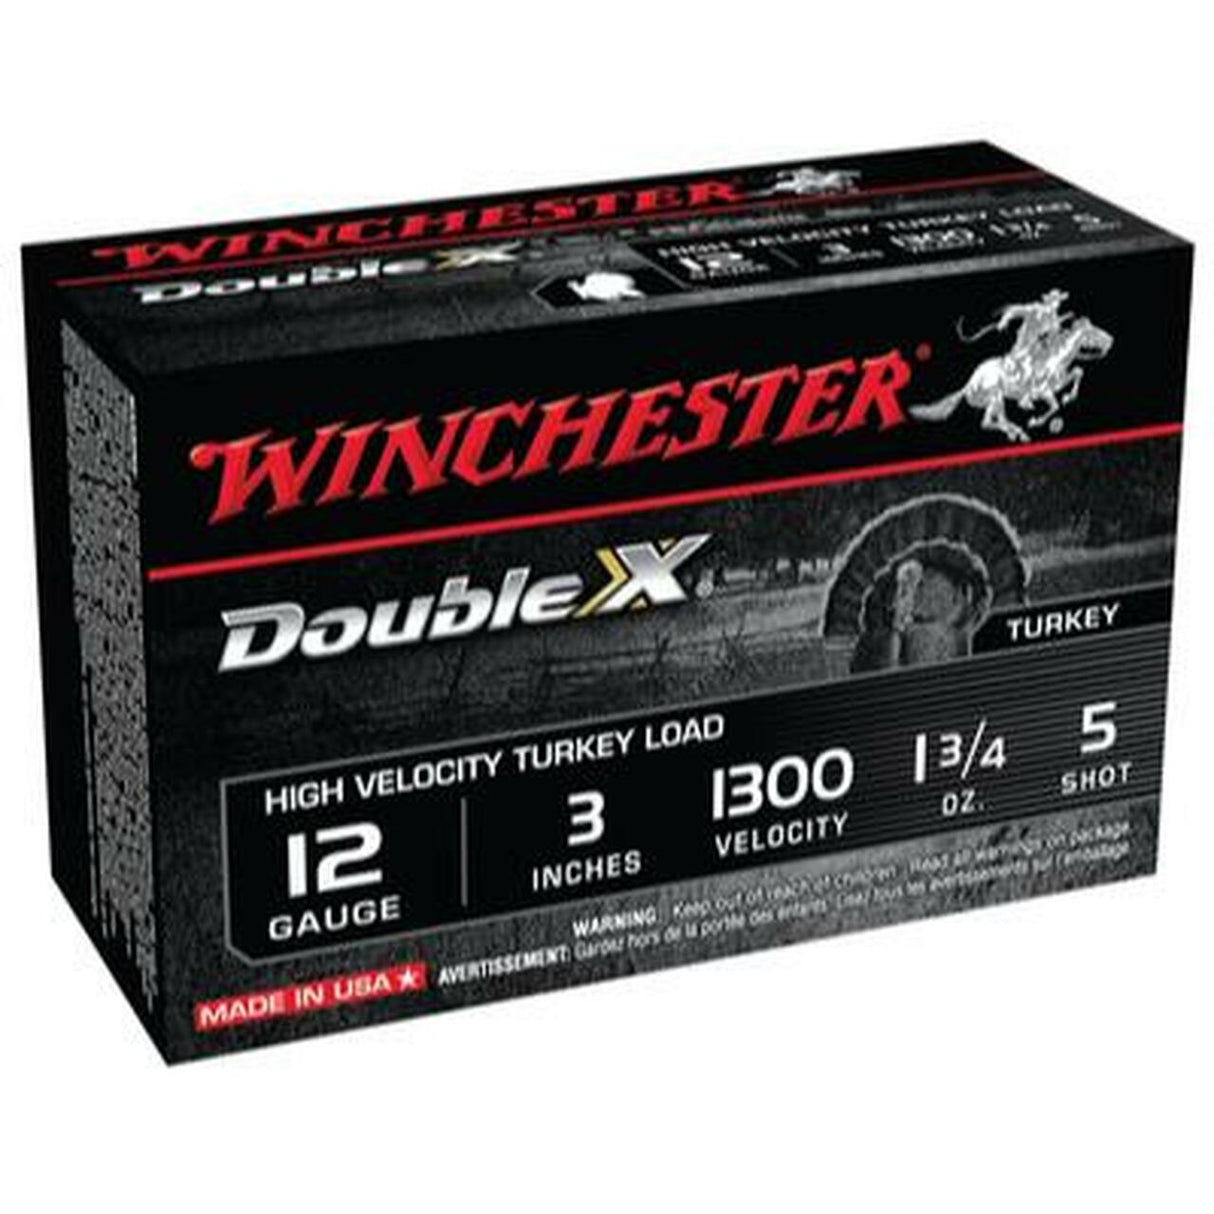 Winchester Double X High Velocity Turkey Loads 12 Gauge 3 Inch 5 Shot